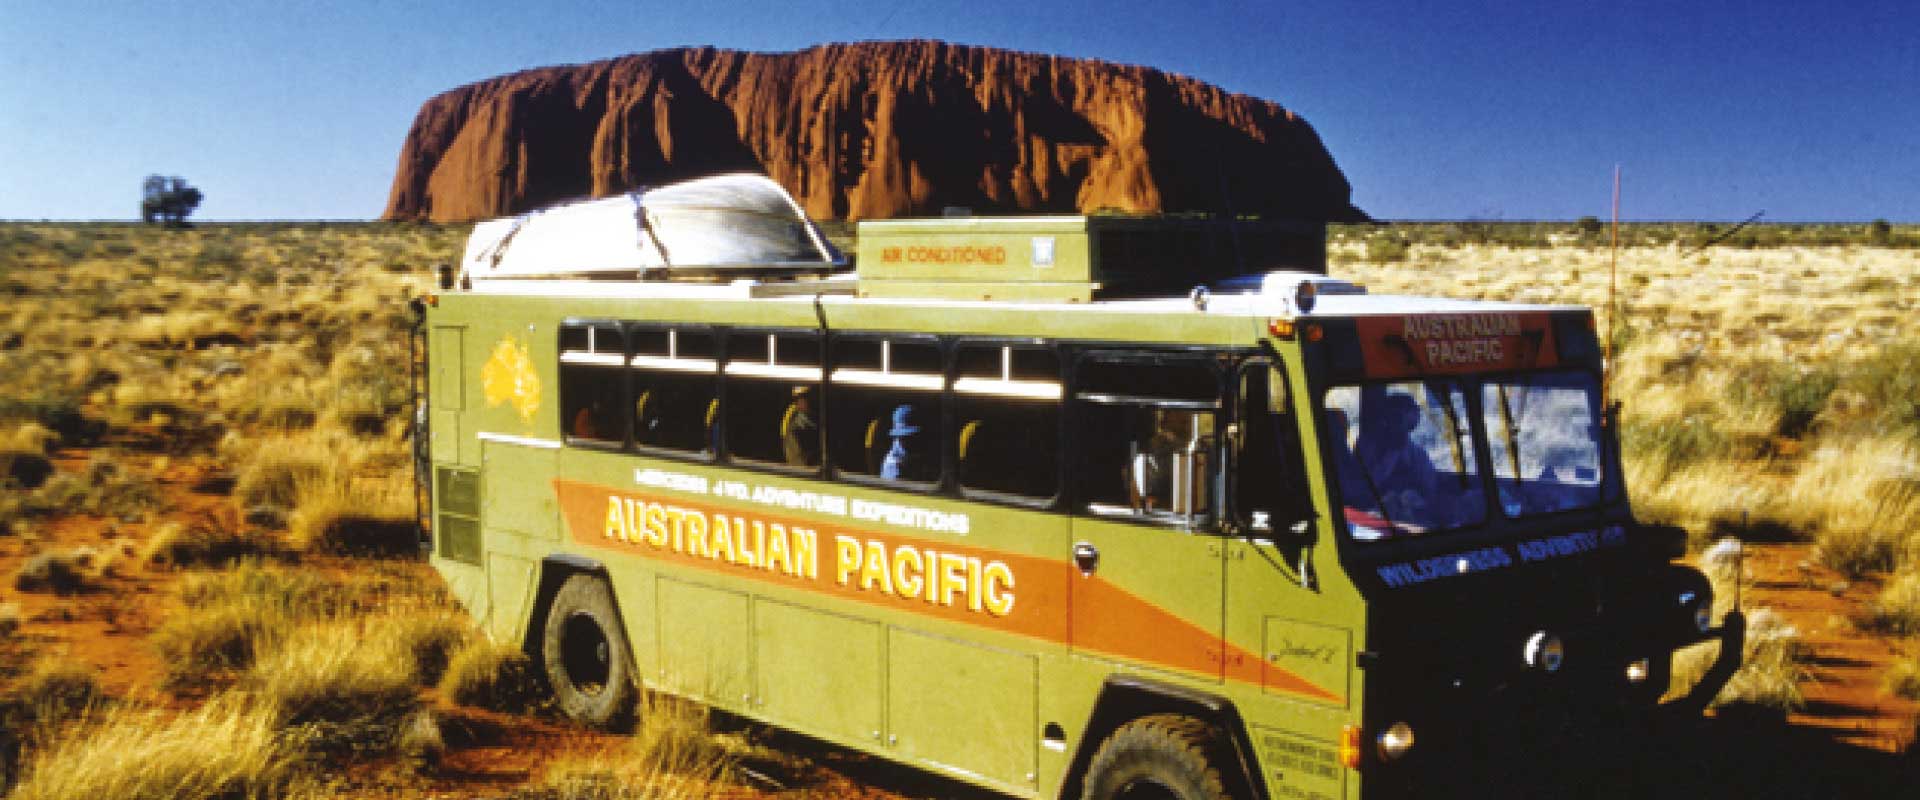 historical image 1980s bus in front of uluru australia